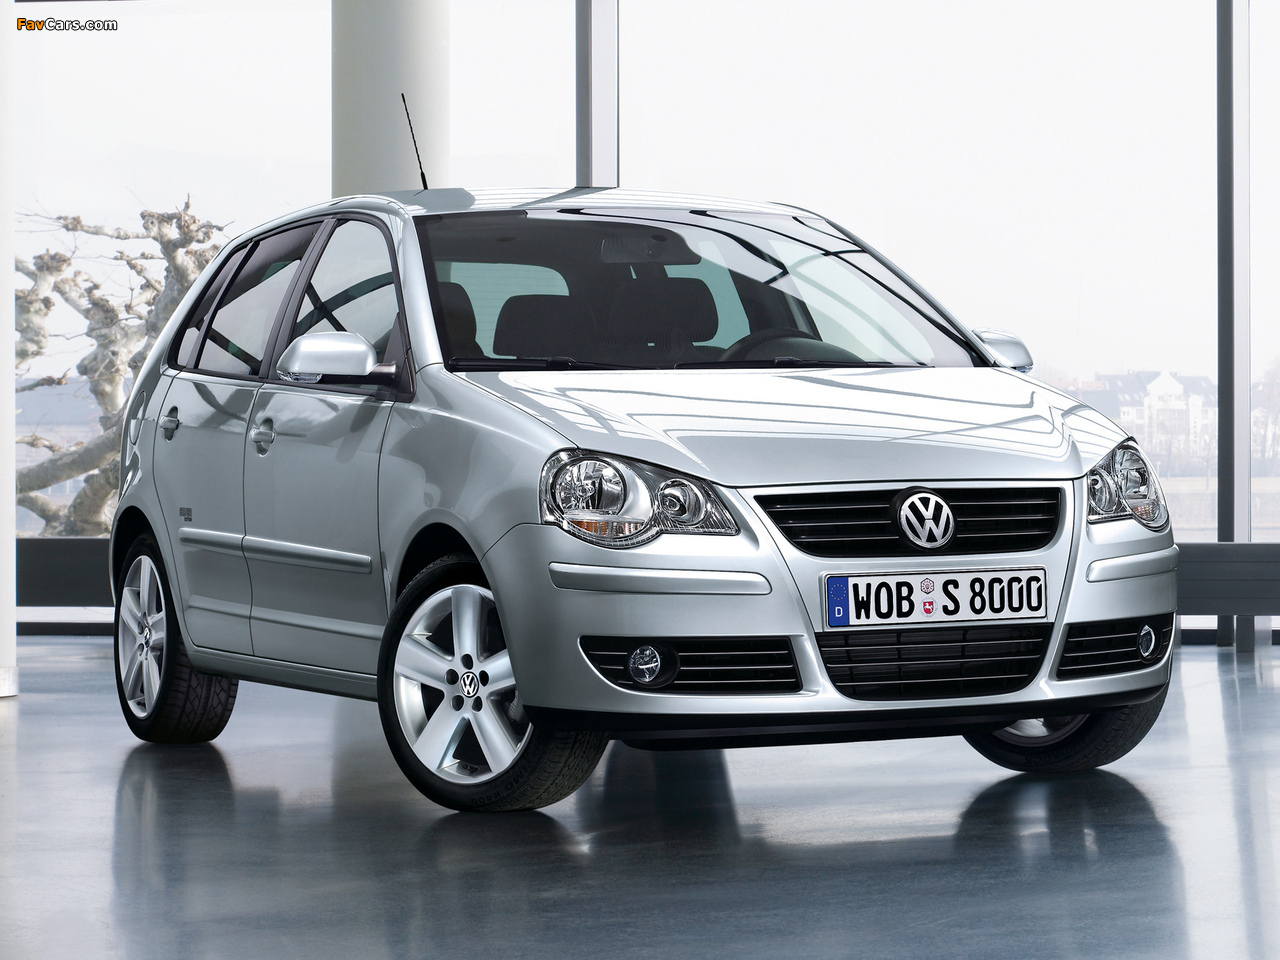 Volkswagen Polo 5-door Silver Edition (Typ 9N3) 2008 images (1280 x 960)